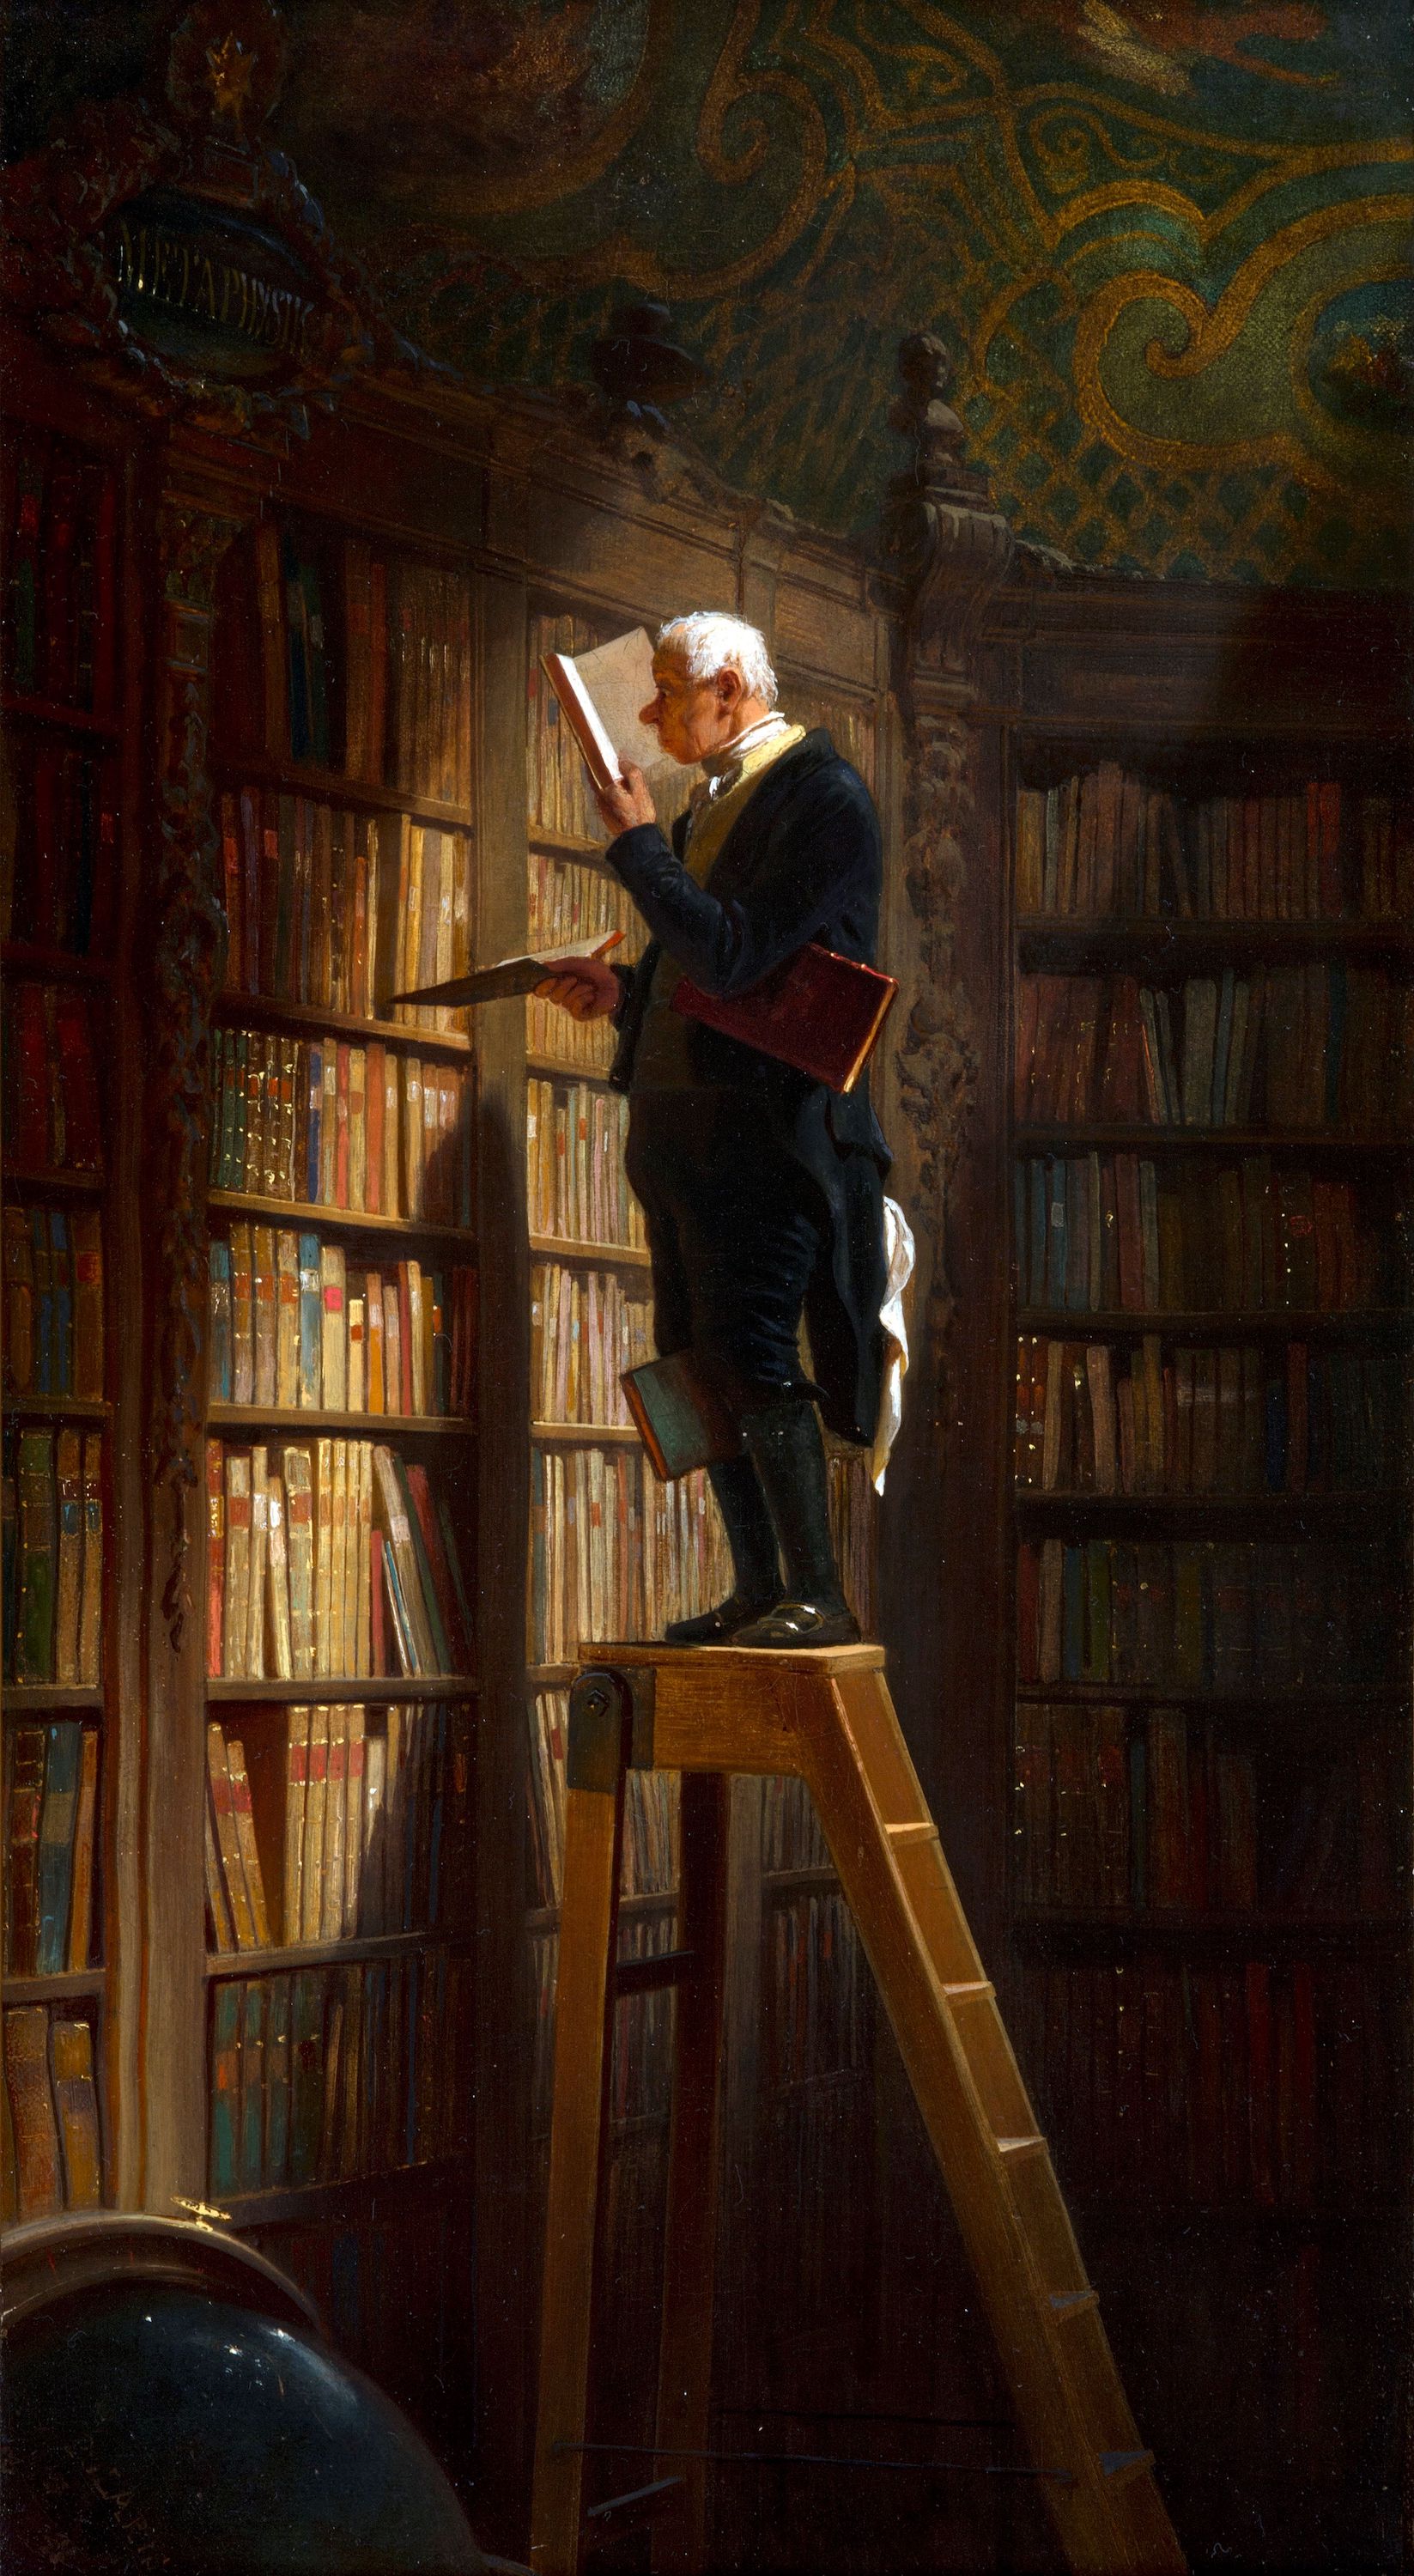 Il Topo di biblioteca by Carl Spitzweg - 1850 ca. - 49.5 x 26.8 cm 